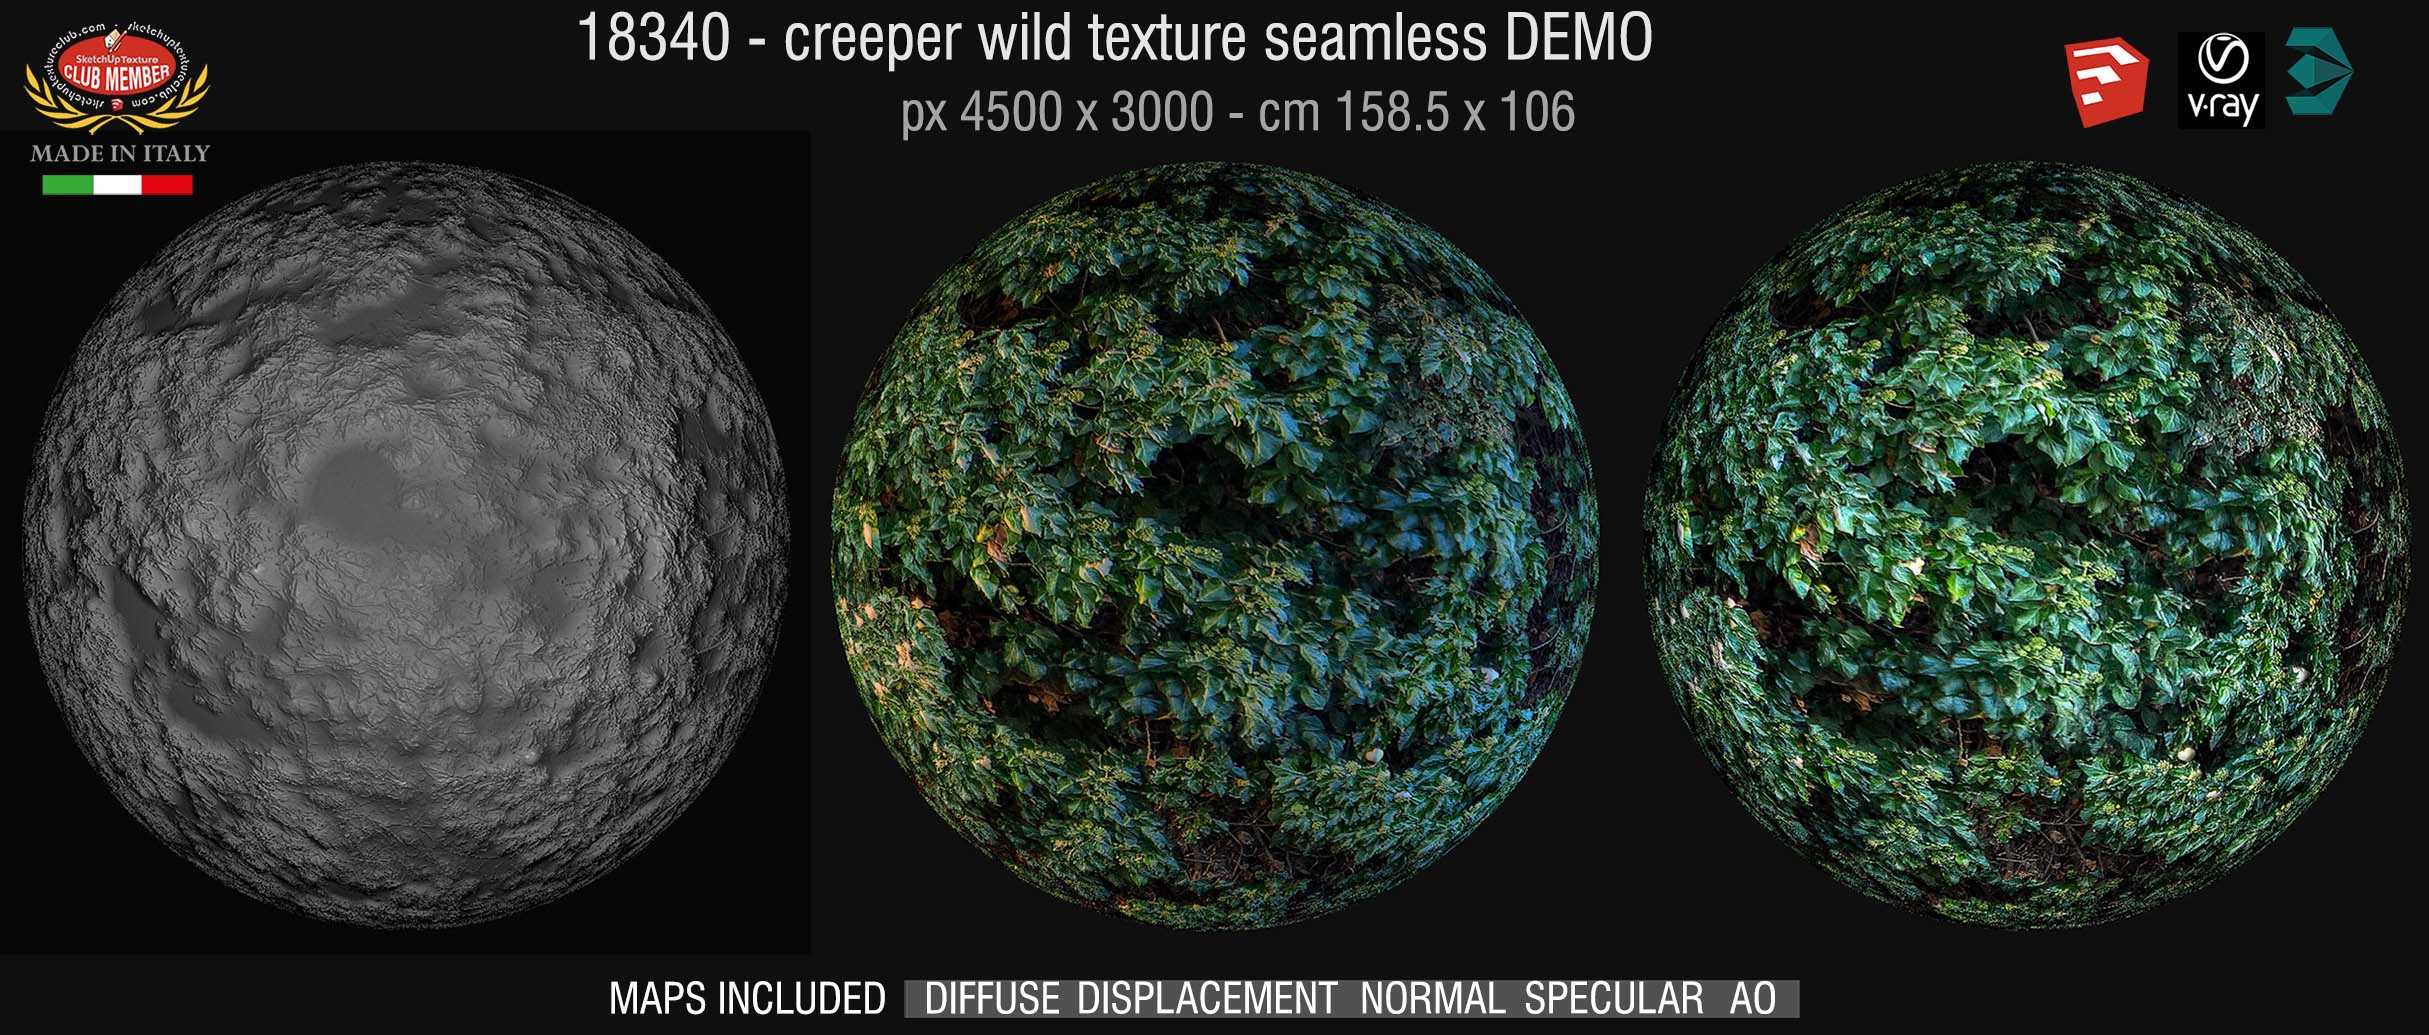 18340 - seamless creeper wild texture + maps DEMO